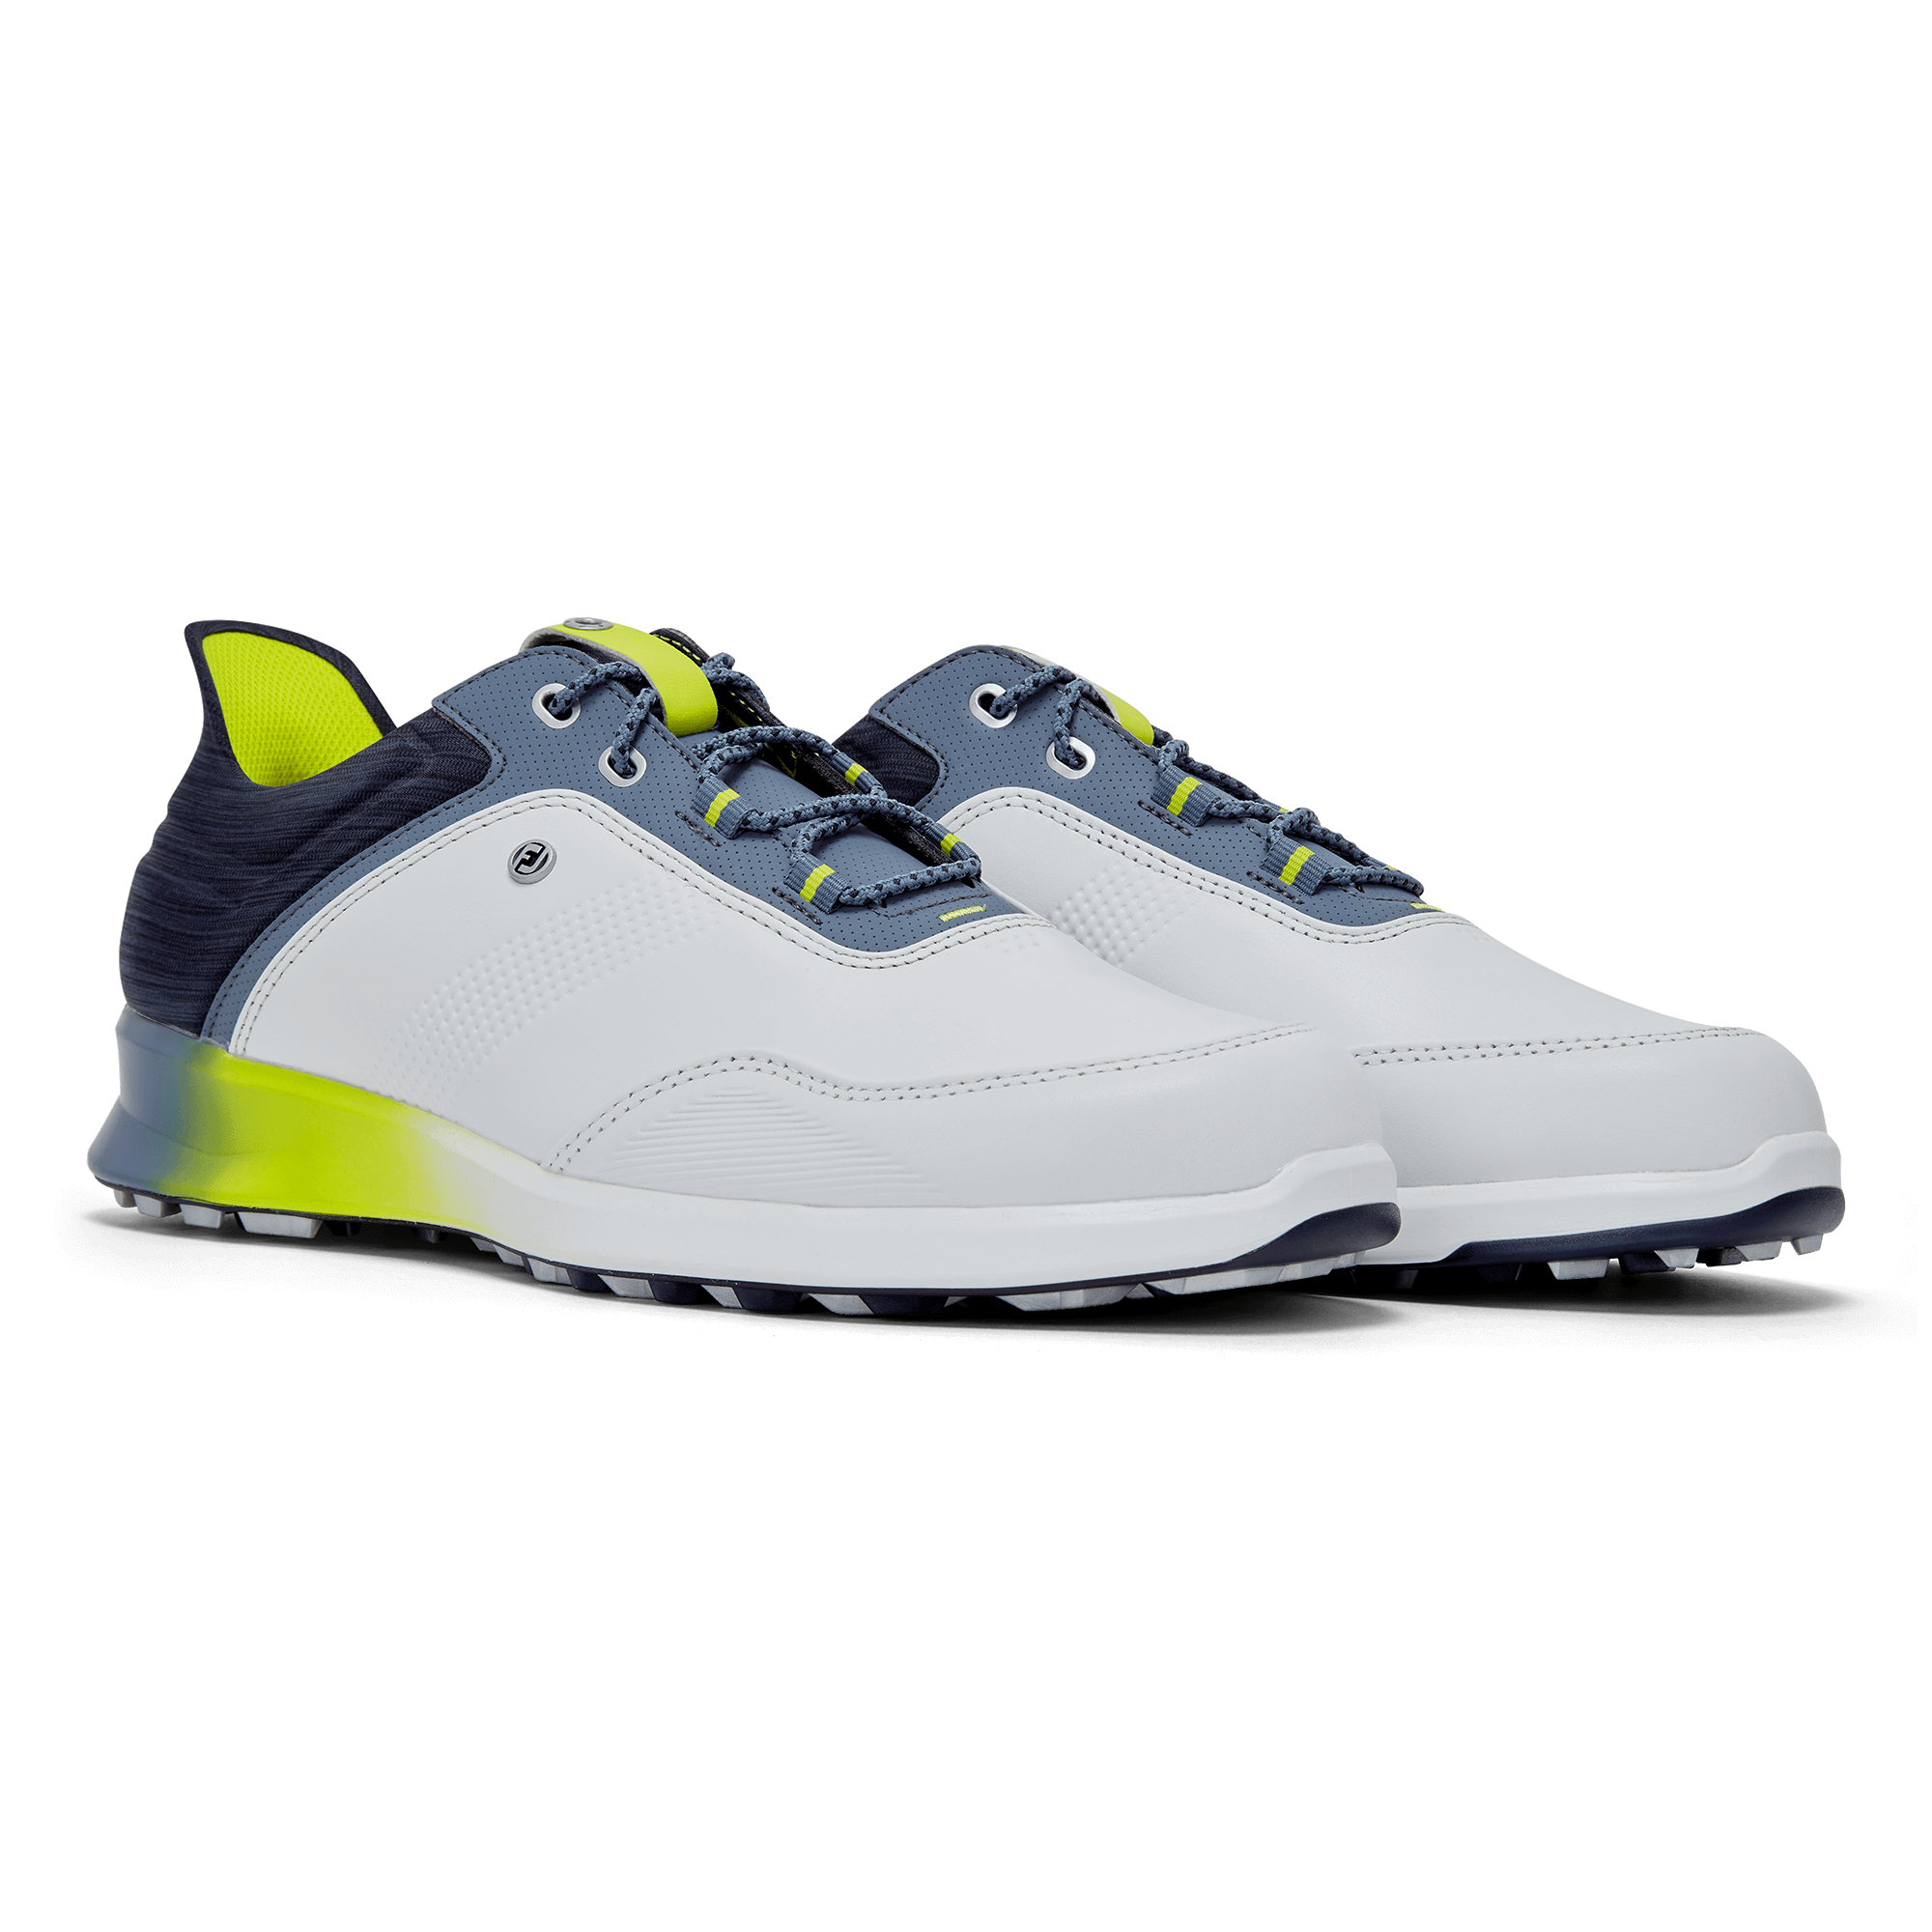 FootJoy Stratos Golf Shoes #50080 White/Navy/Lime | Scottsdale Golf